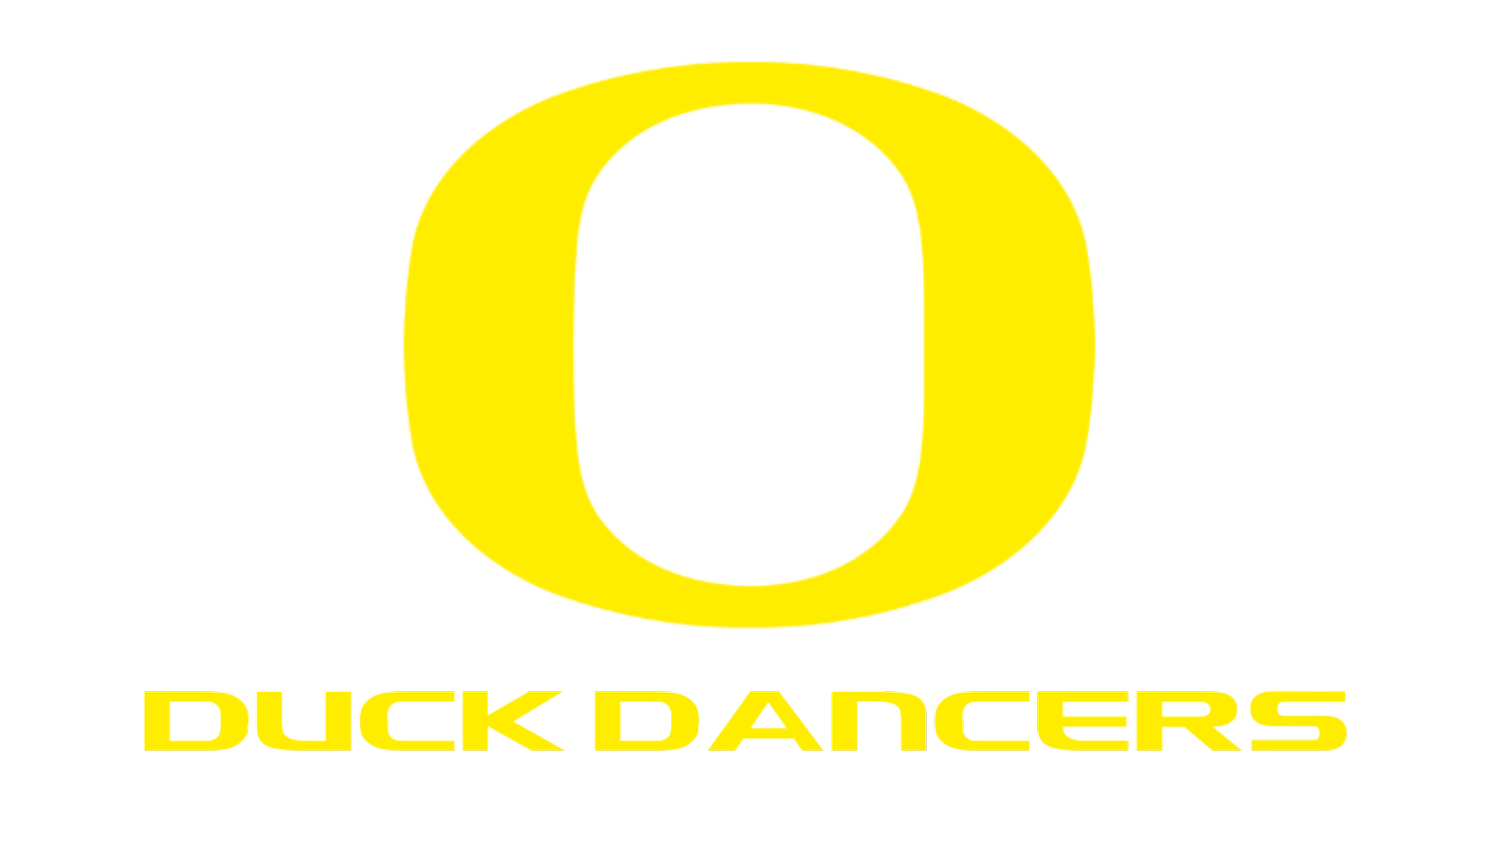 University of Oregon Dance Team